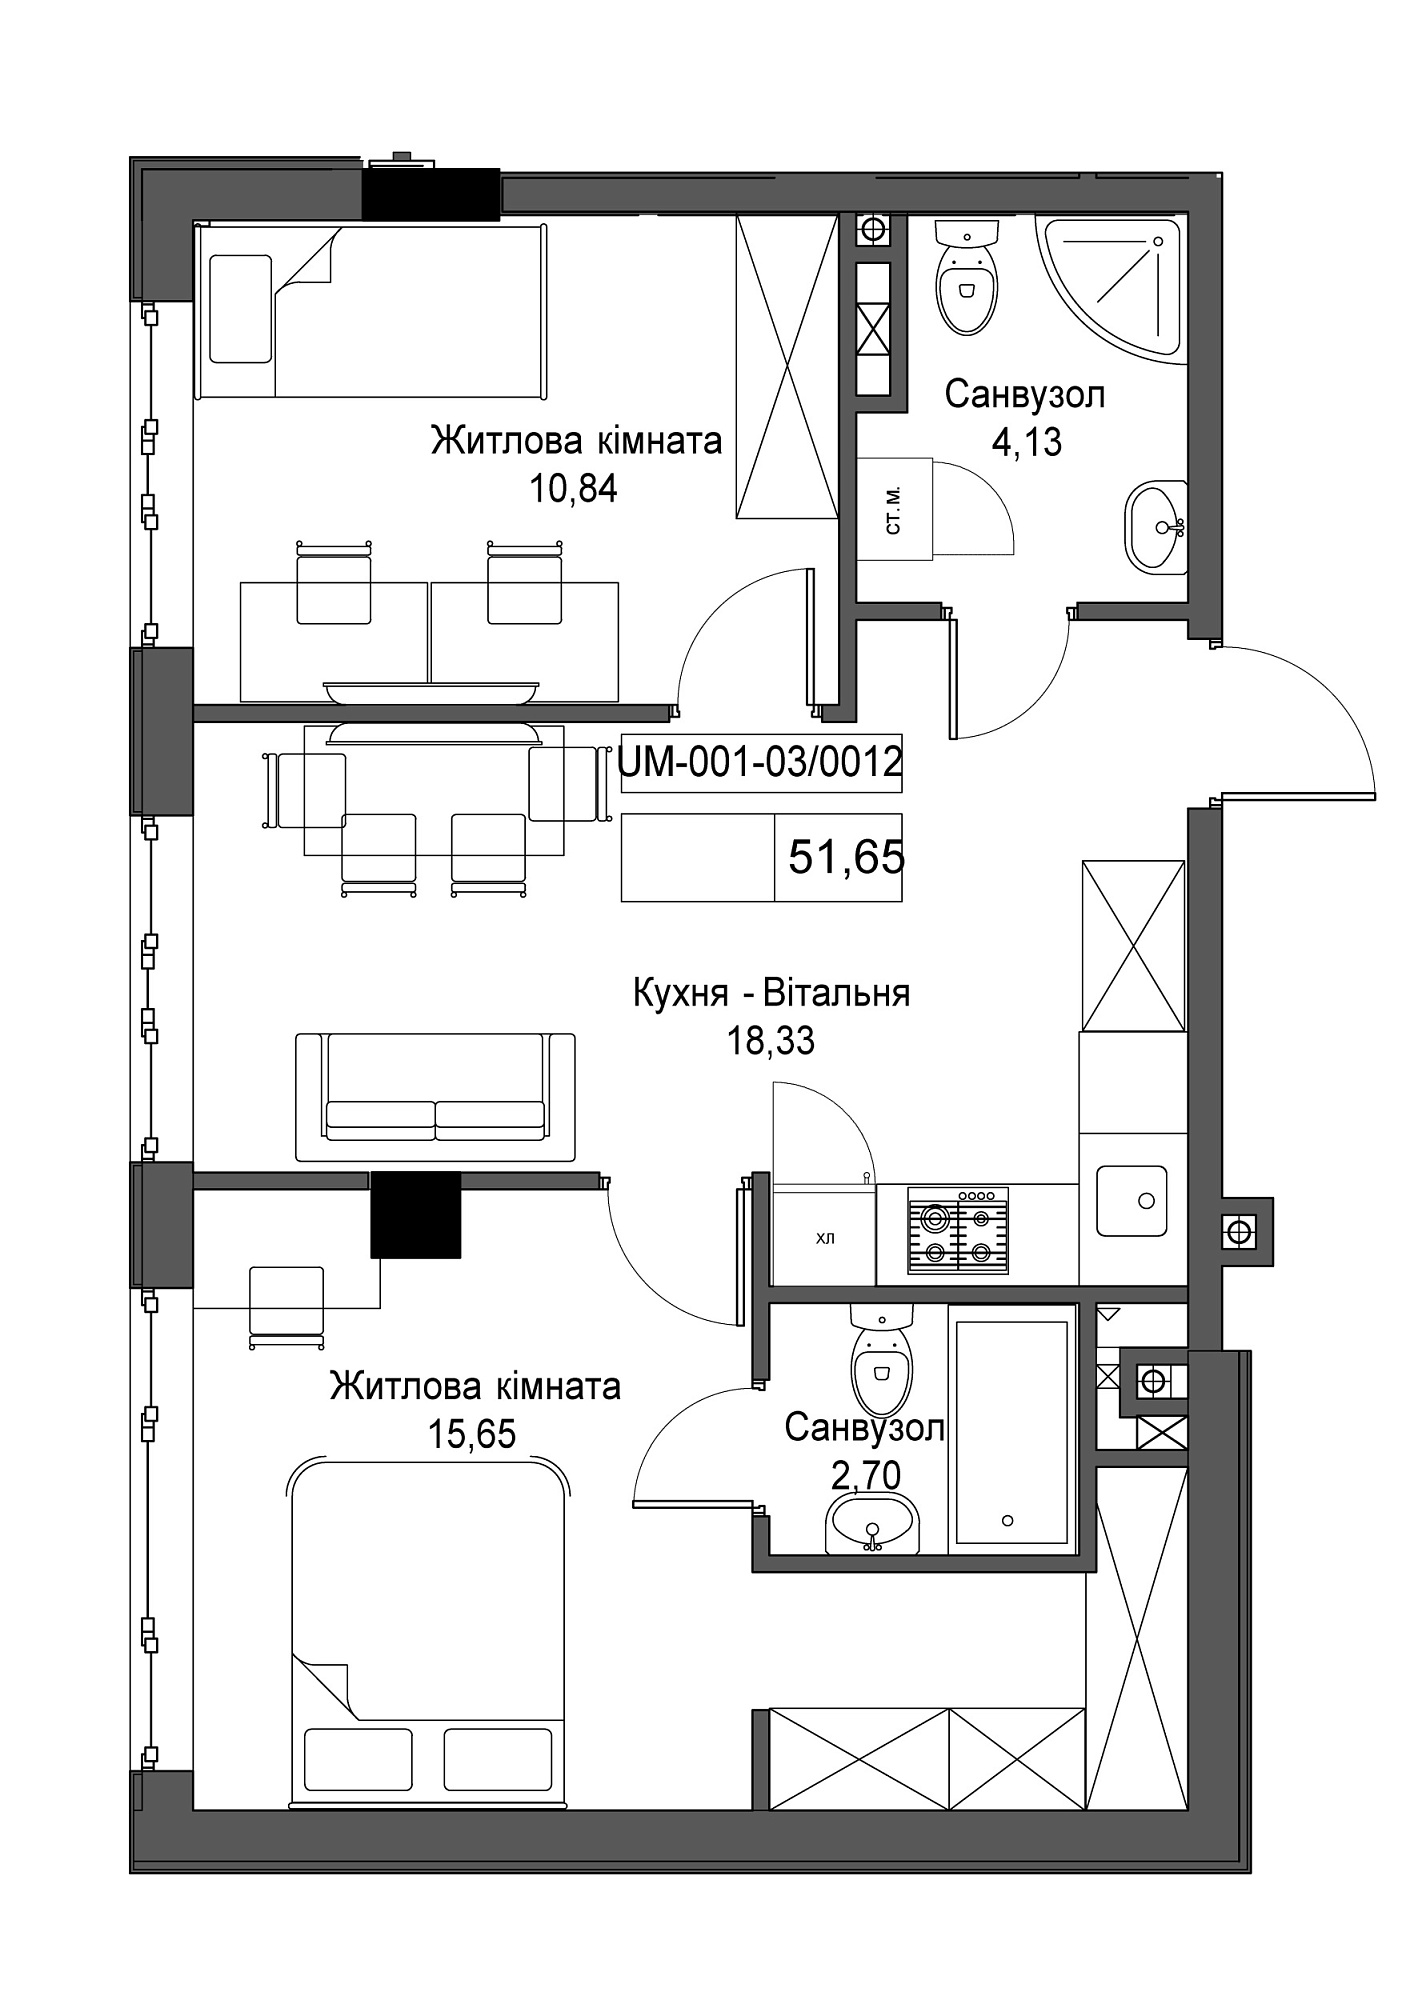 Planning 2-rm flats area 51.65m2, UM-001-03/0012.